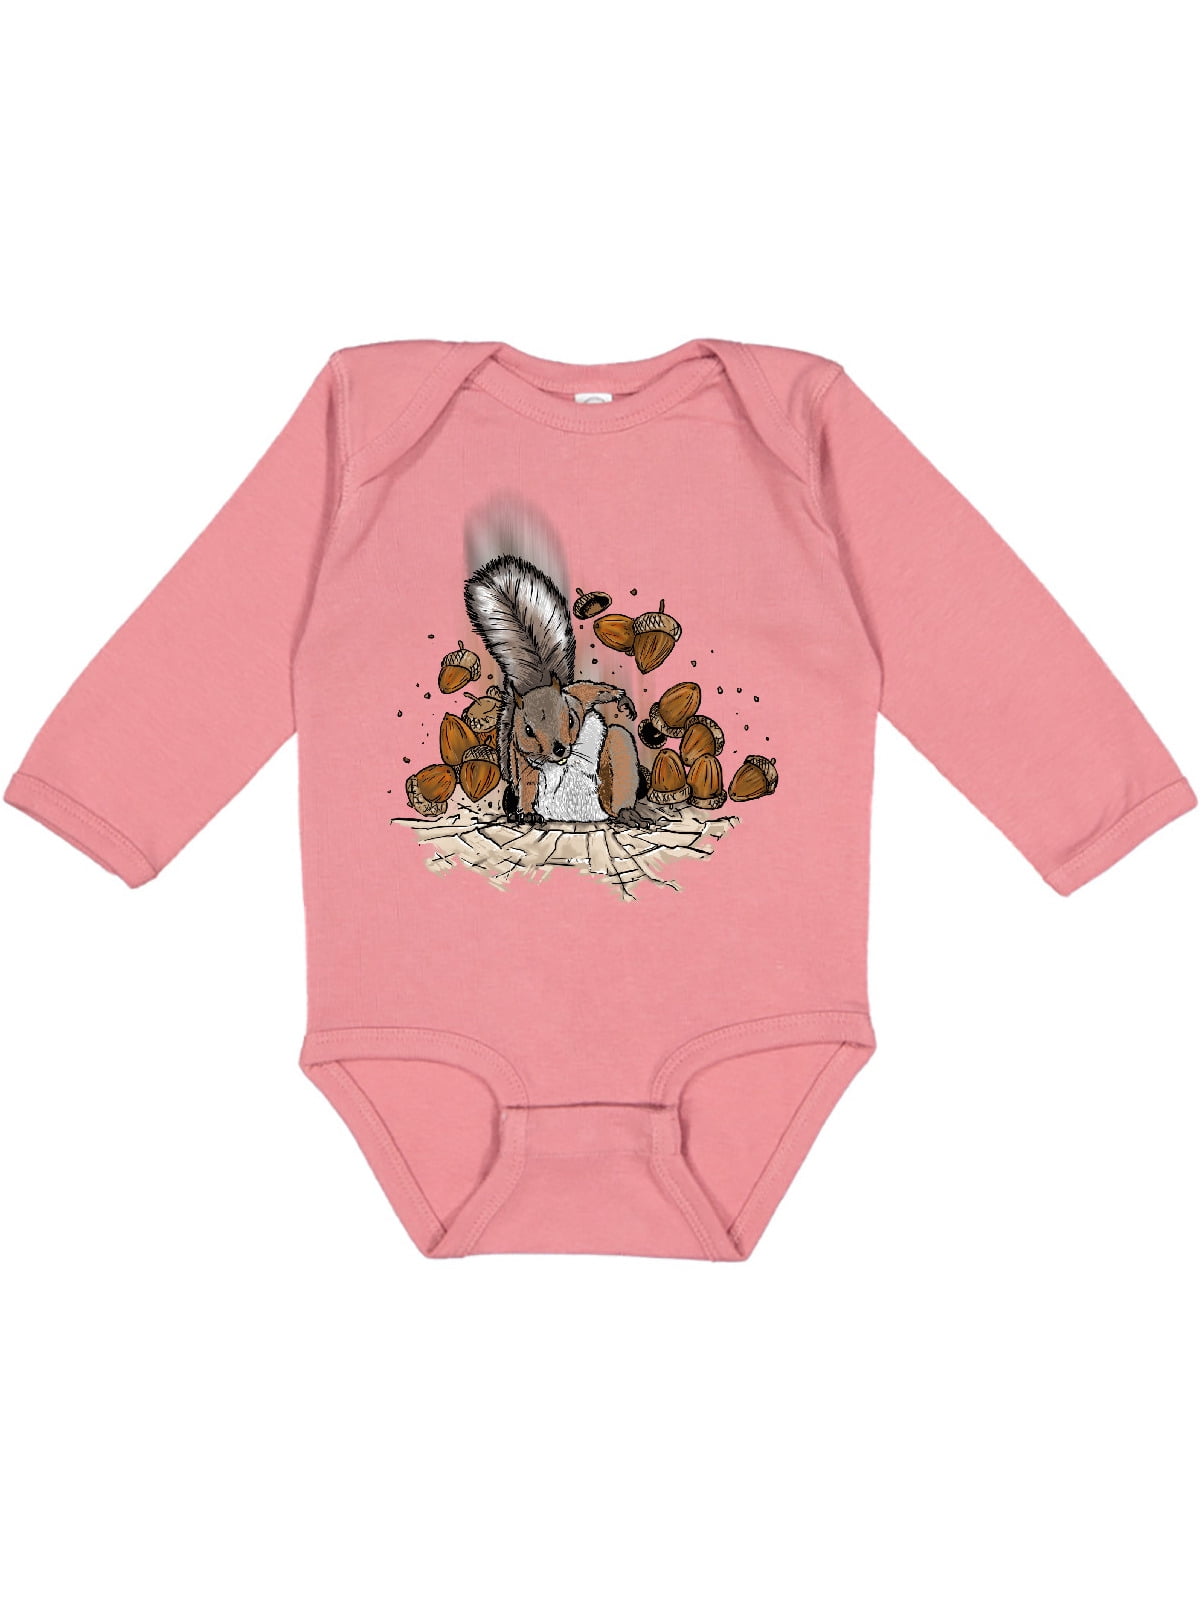 Acorns and Squirrels Unisex Baby Bodysuit Infant Cotton Outfits Long Sleeve Jumpsuit 